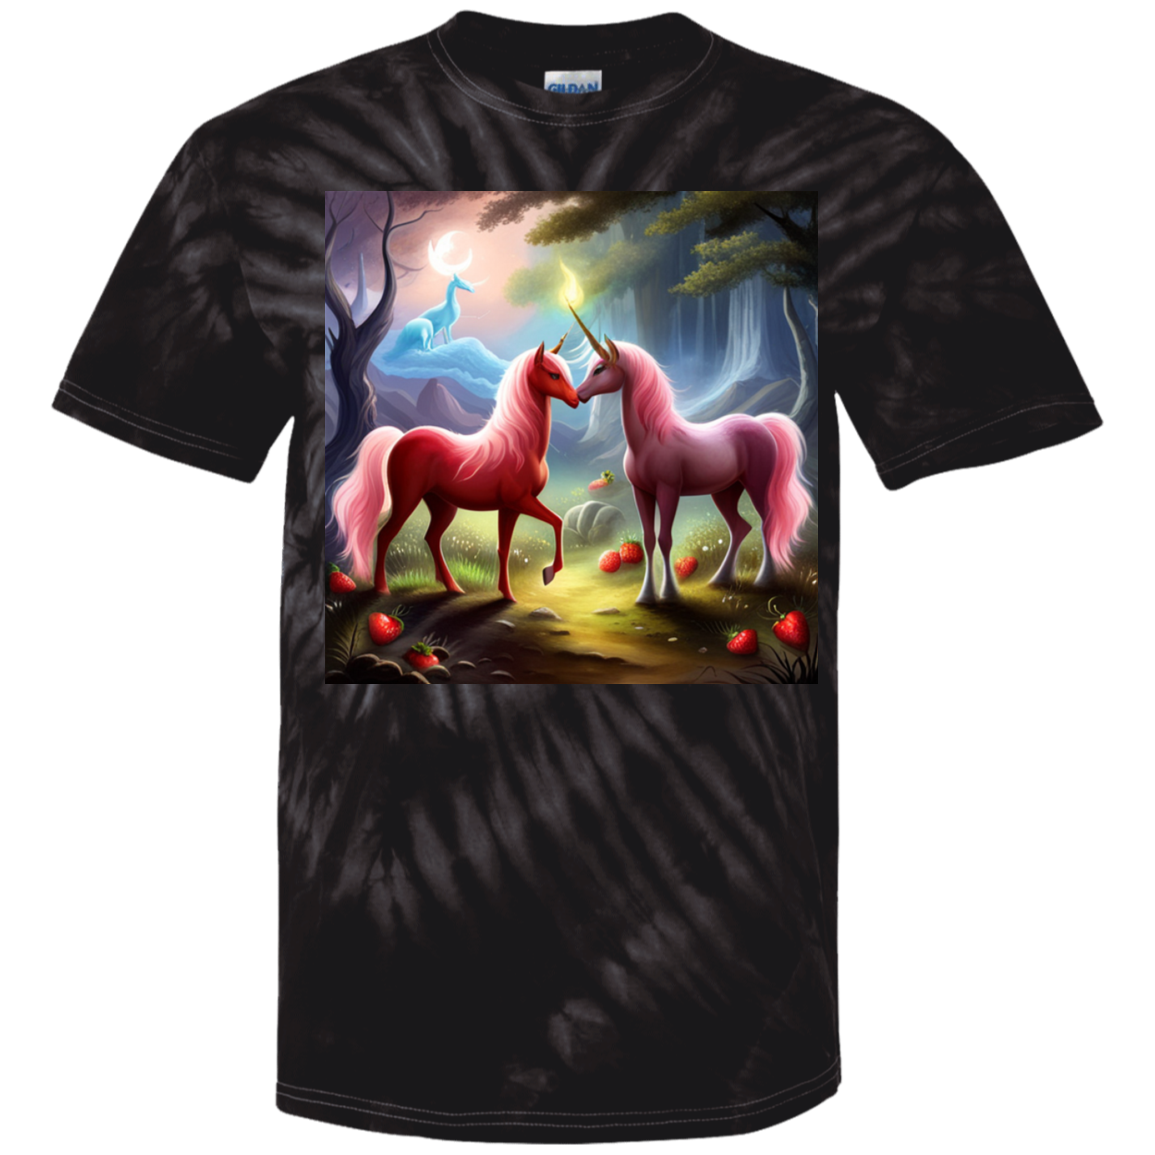 Unicorns T-Shirt Tie Die Youth